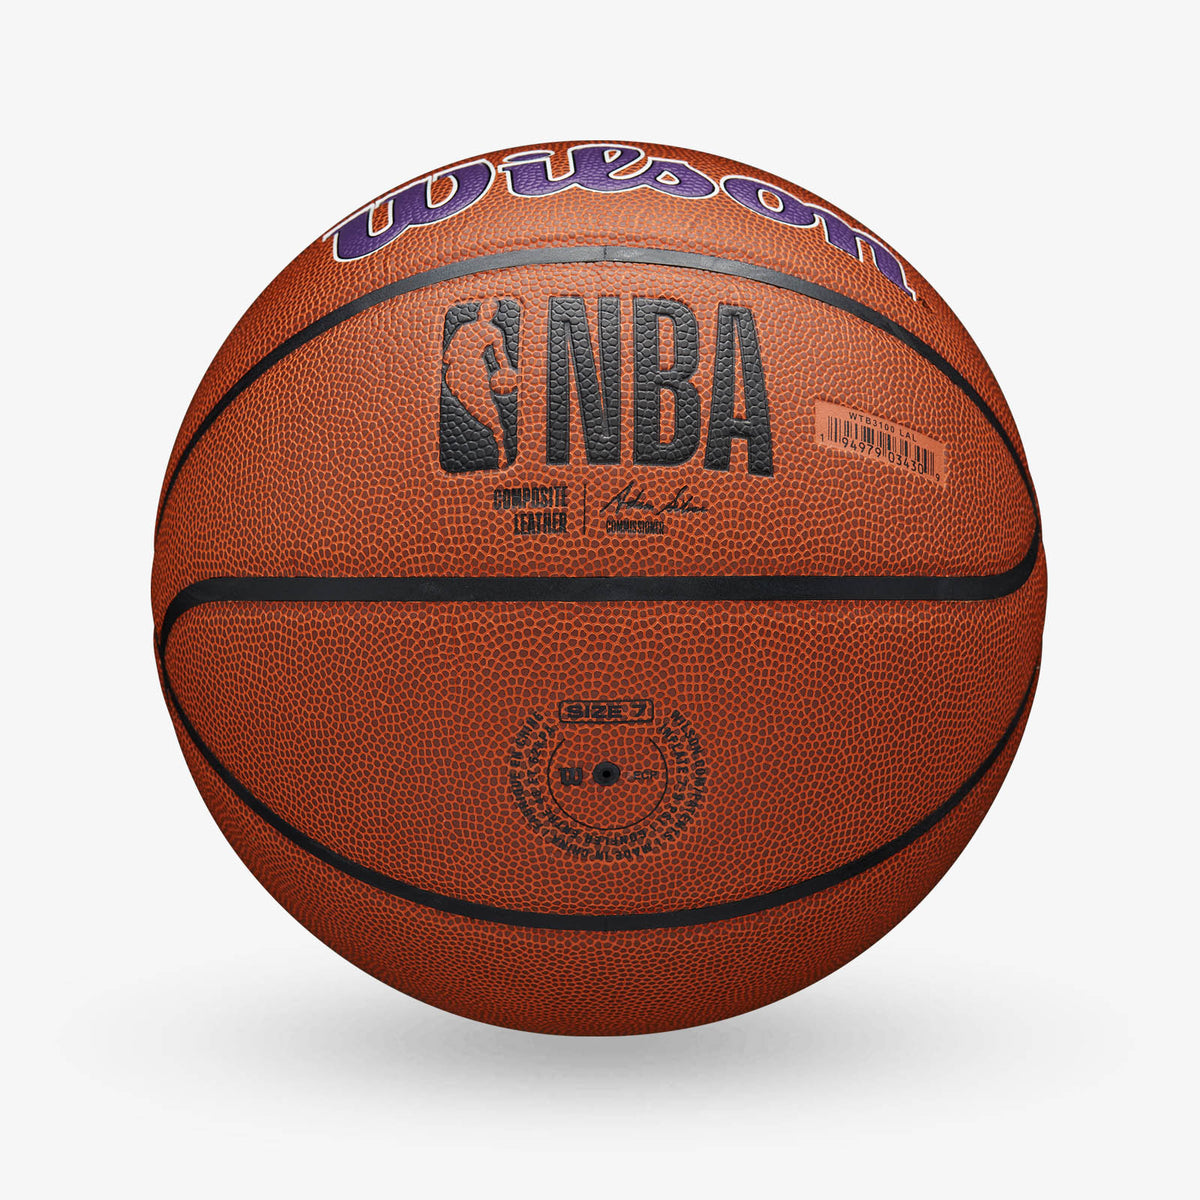 Los Angeles Lakers NBA Team Alliance Basketball - Size 7